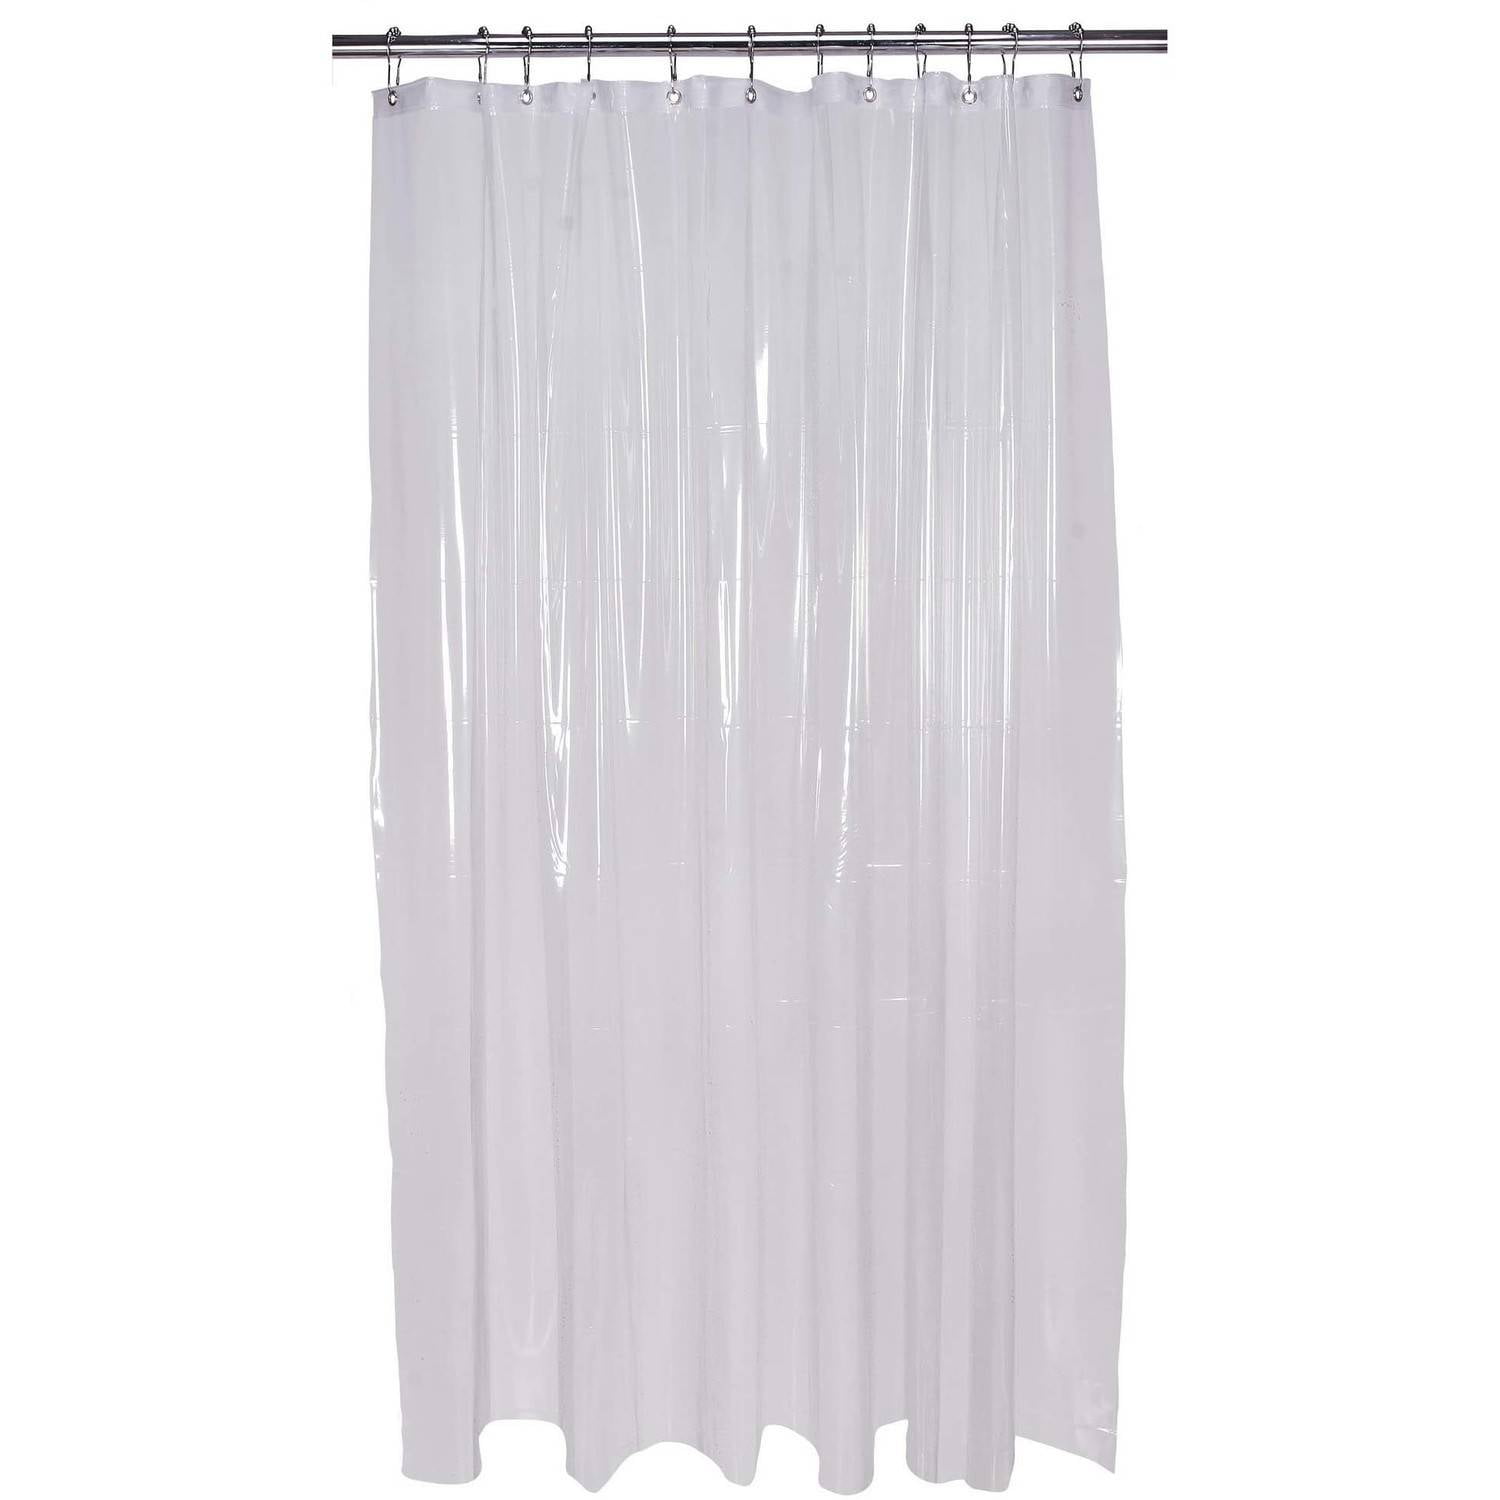 Bath Bliss Extra Long Shower Curtain, 86 Inch Long Shower Curtain